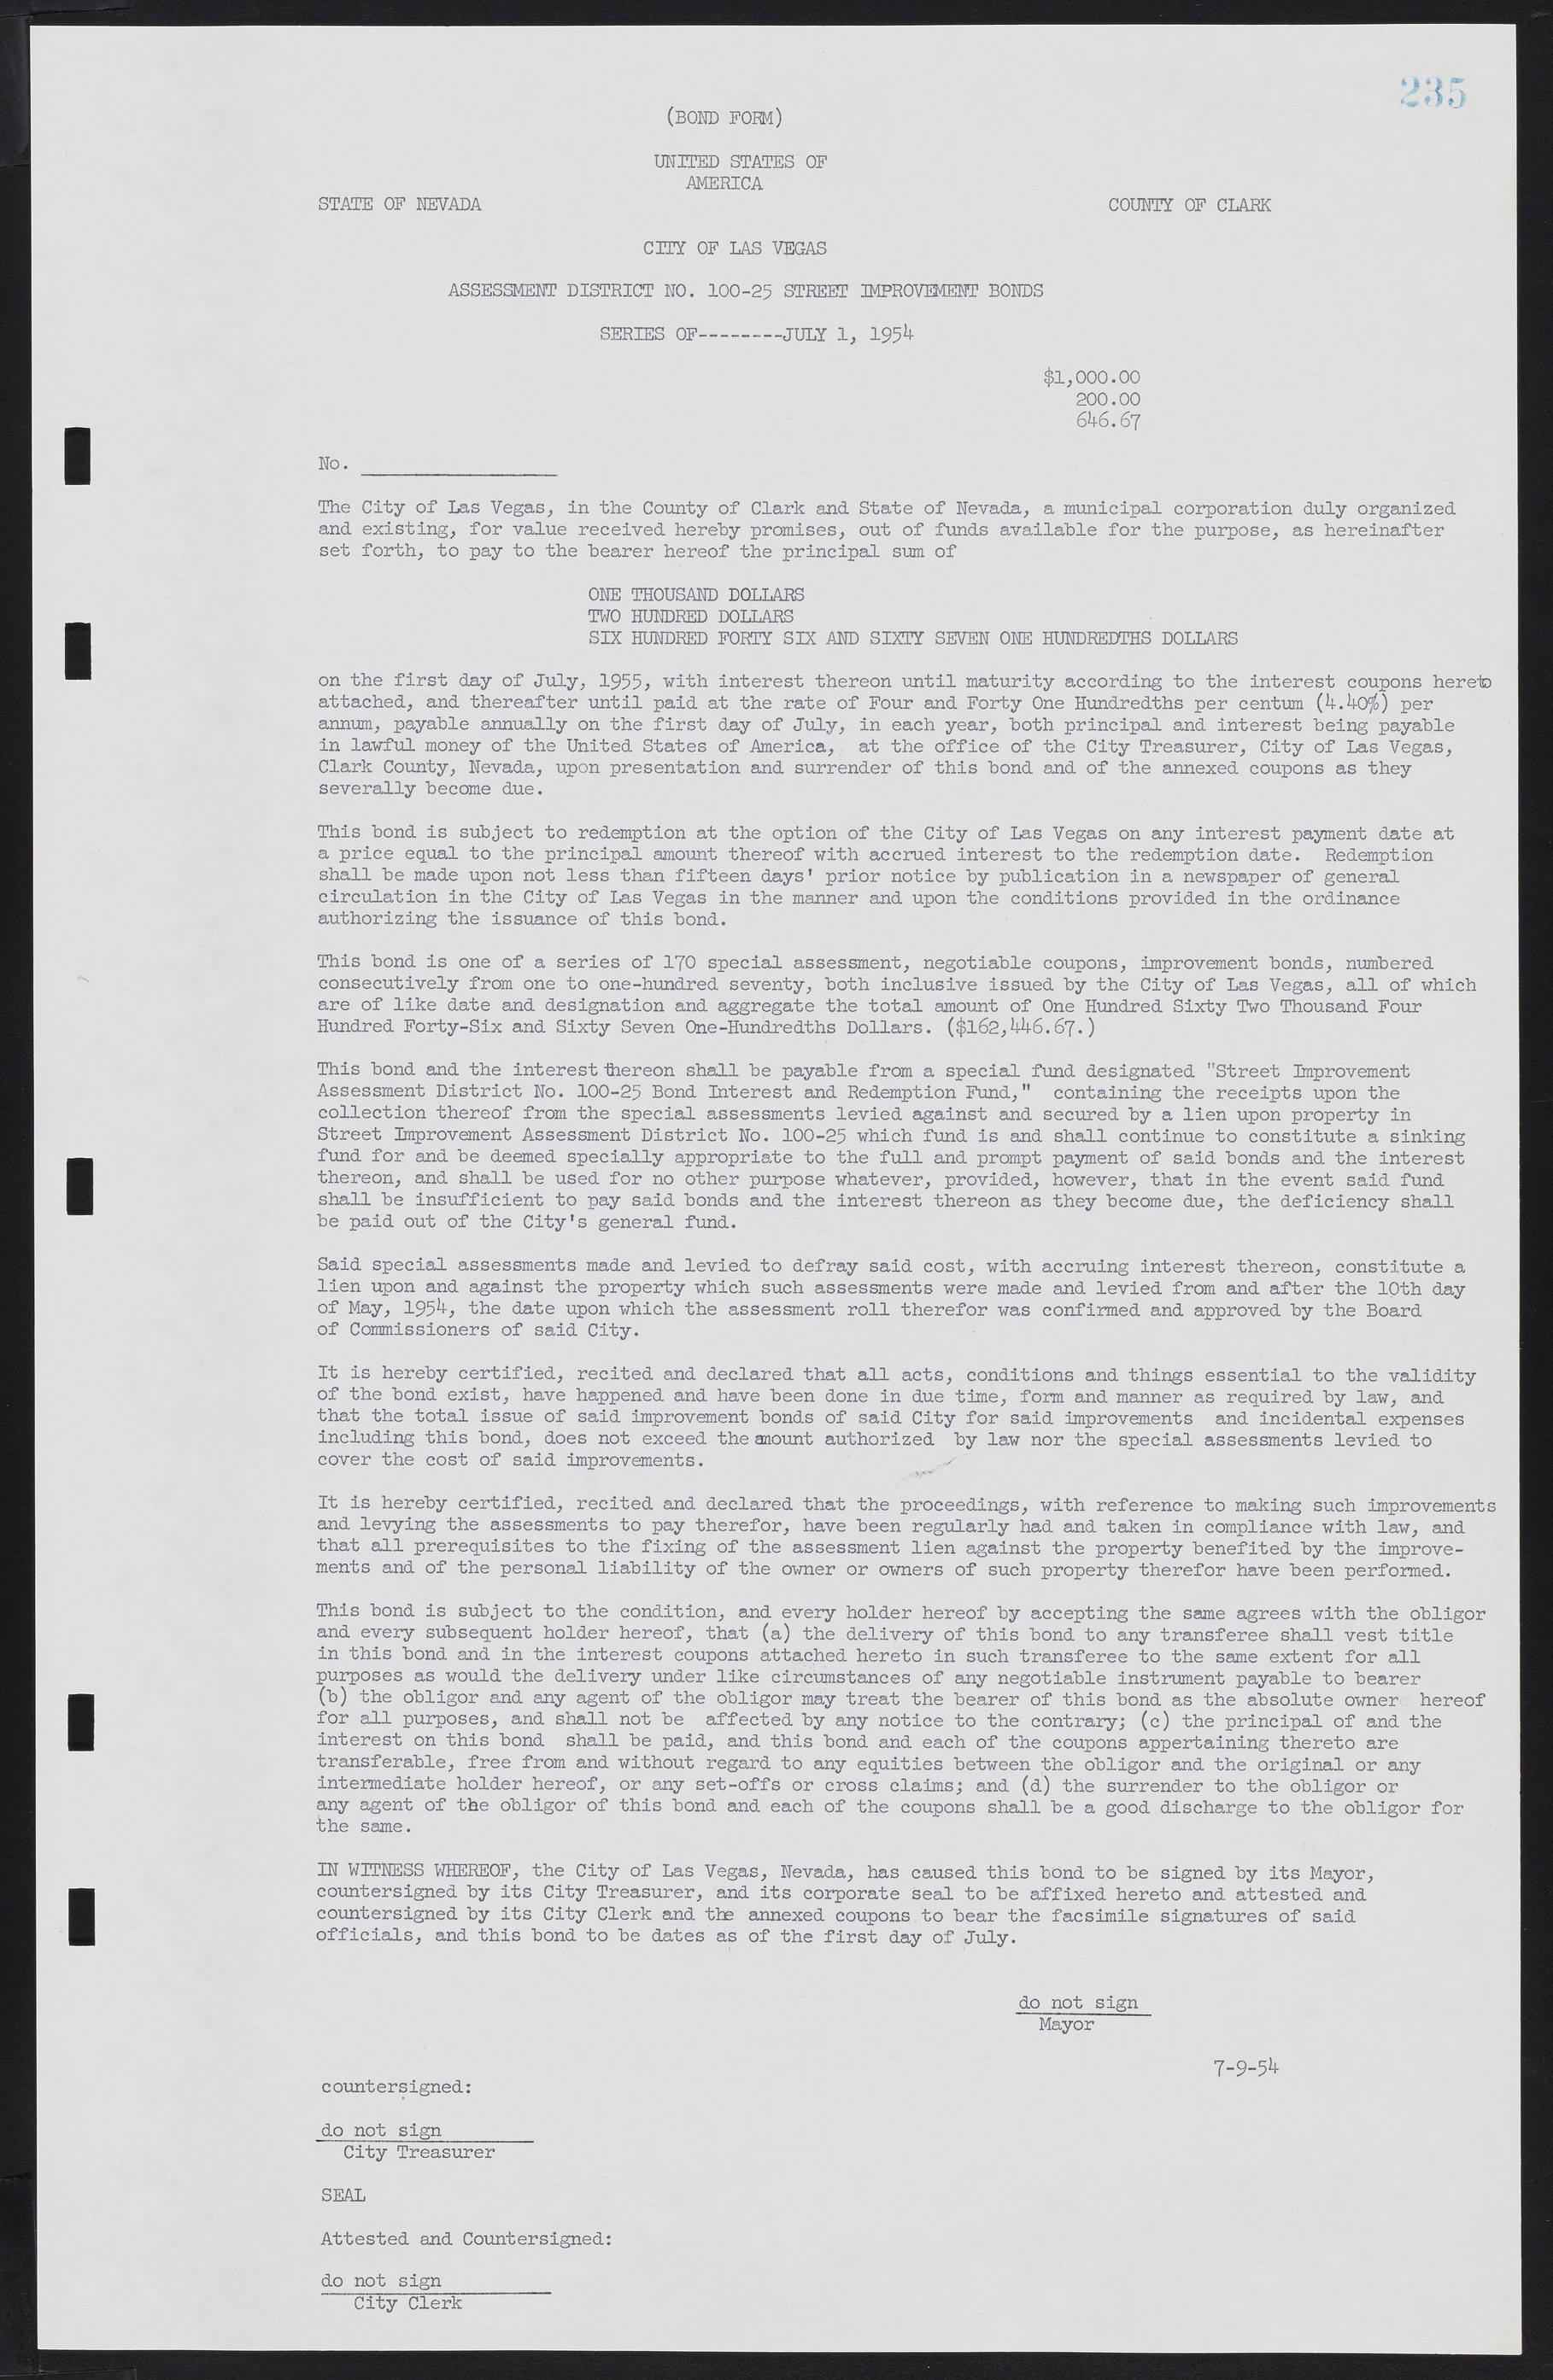 Las Vegas City Commission Minutes, February 17, 1954 to September 21, 1955, lvc000009-241